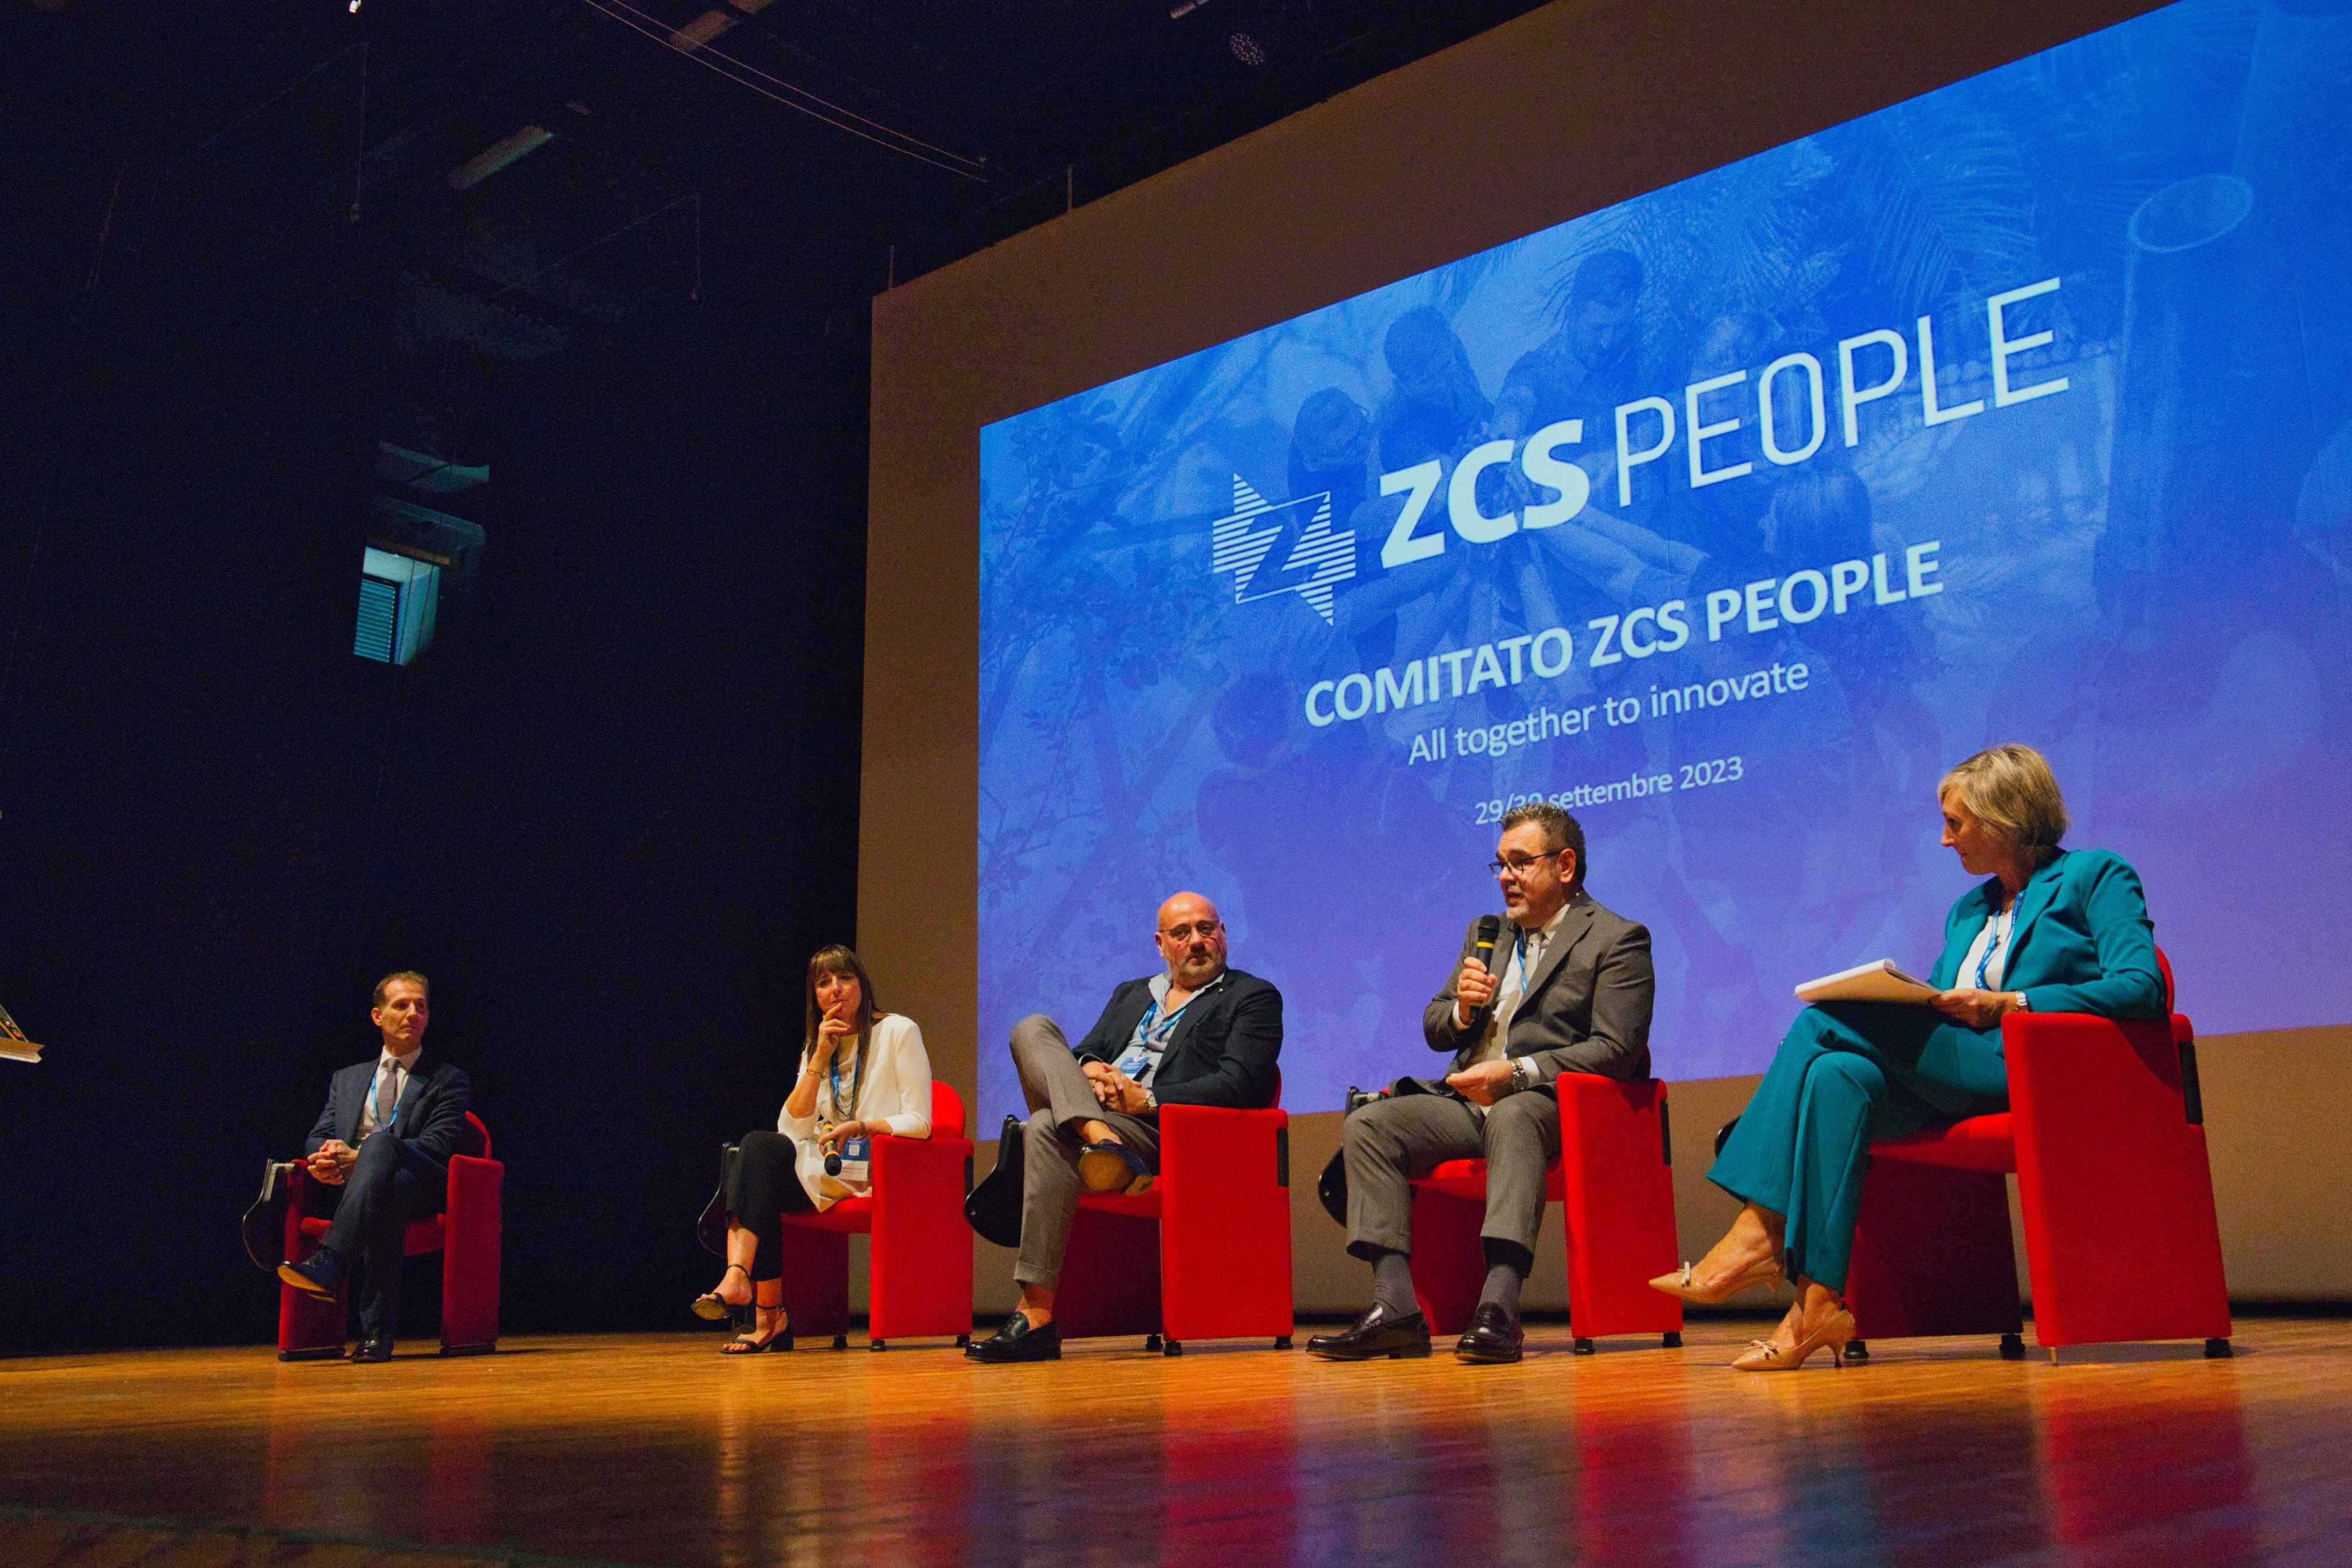 Zcs people event